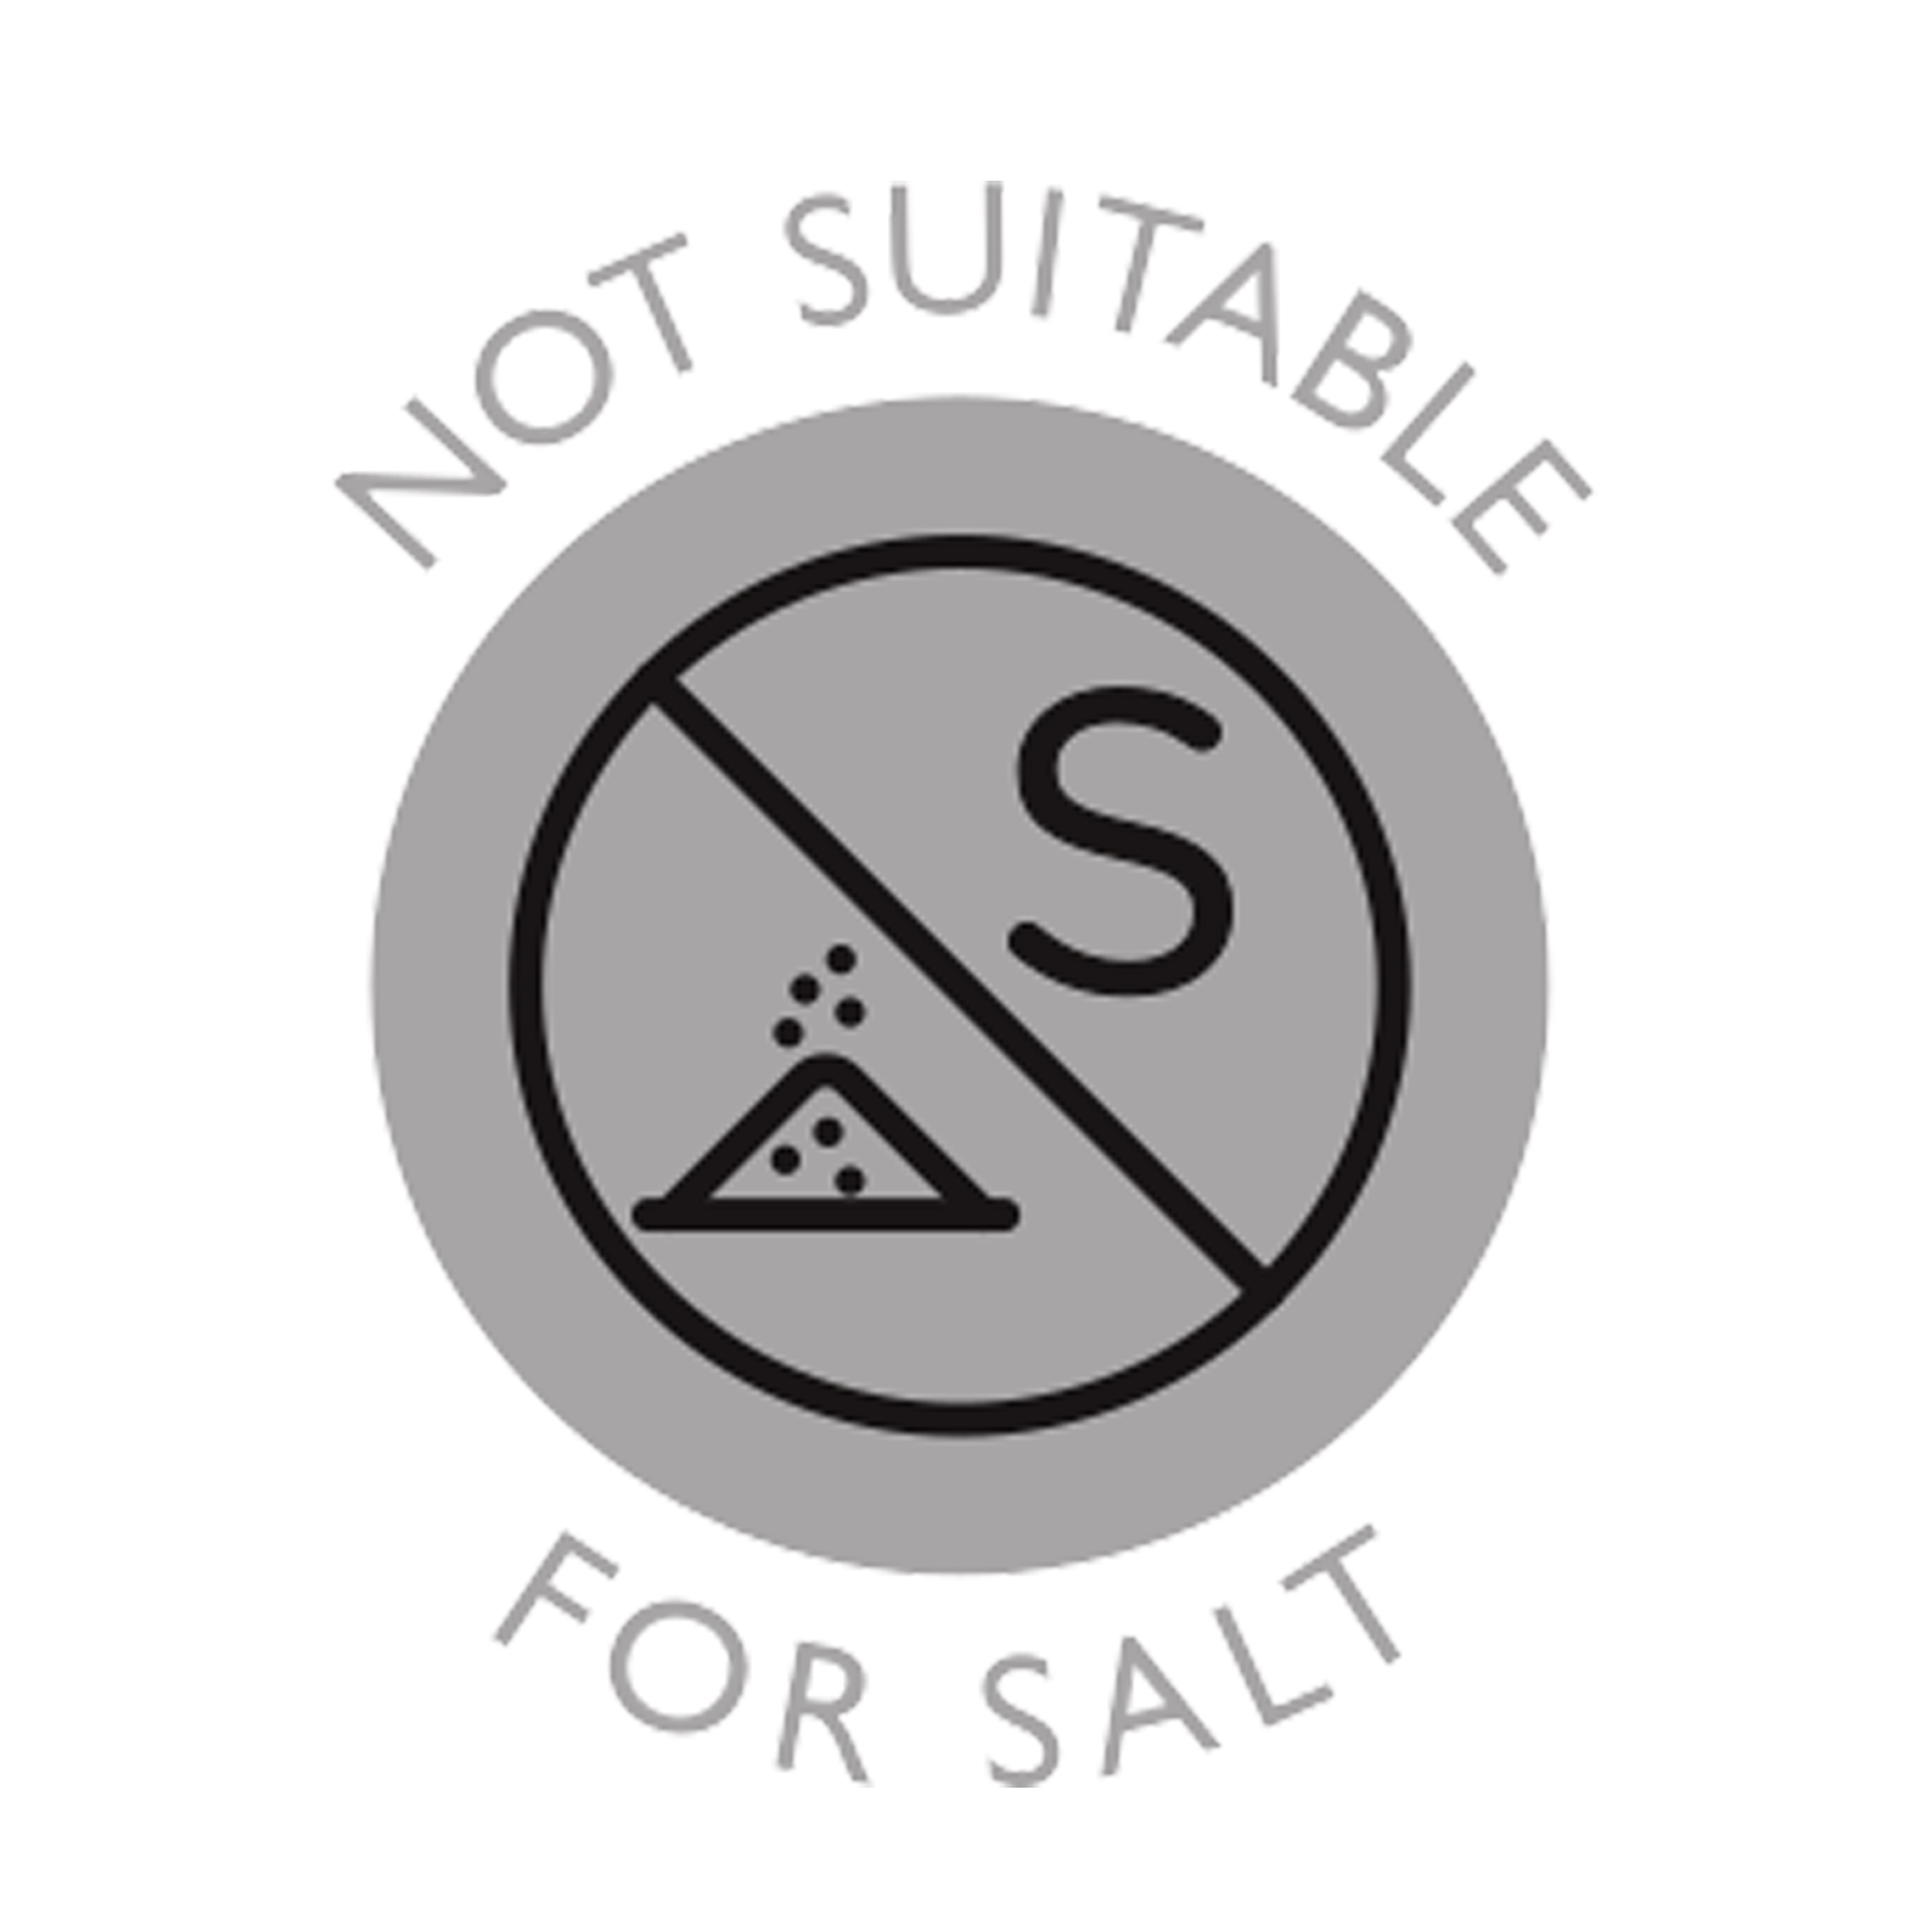 Not Suitable for Salt JPG